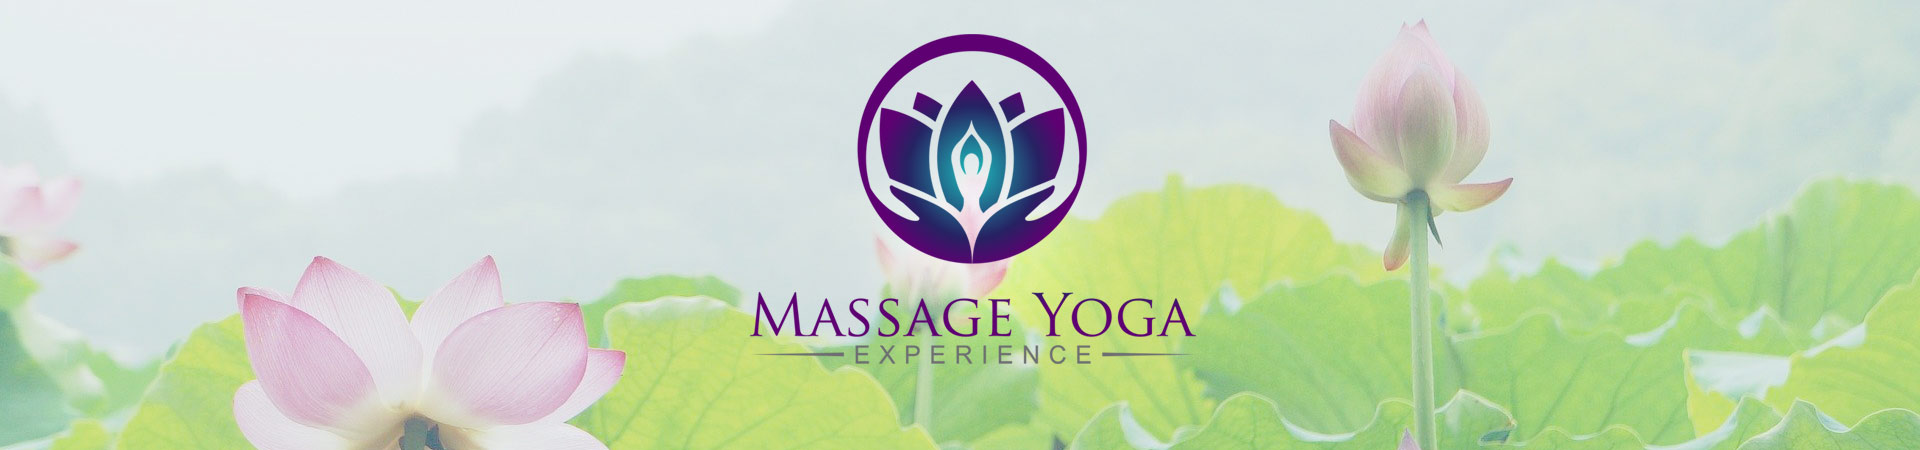 massage yoga classes flourish michelle ditter